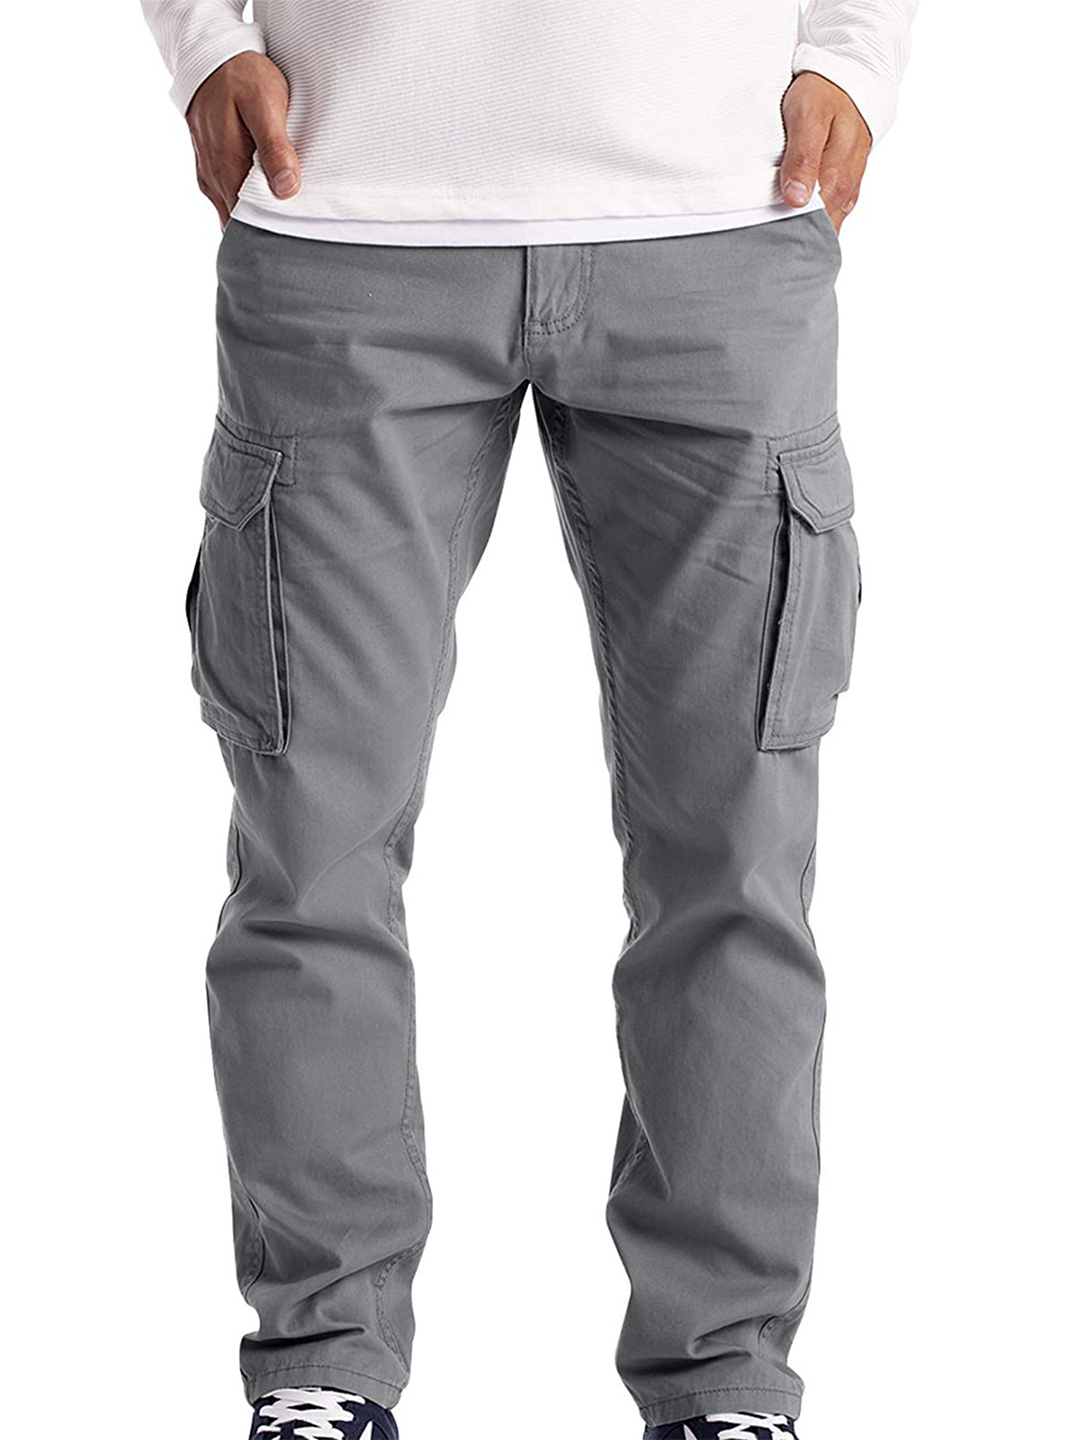 Men's Cargo Pocket Casual Running Pants